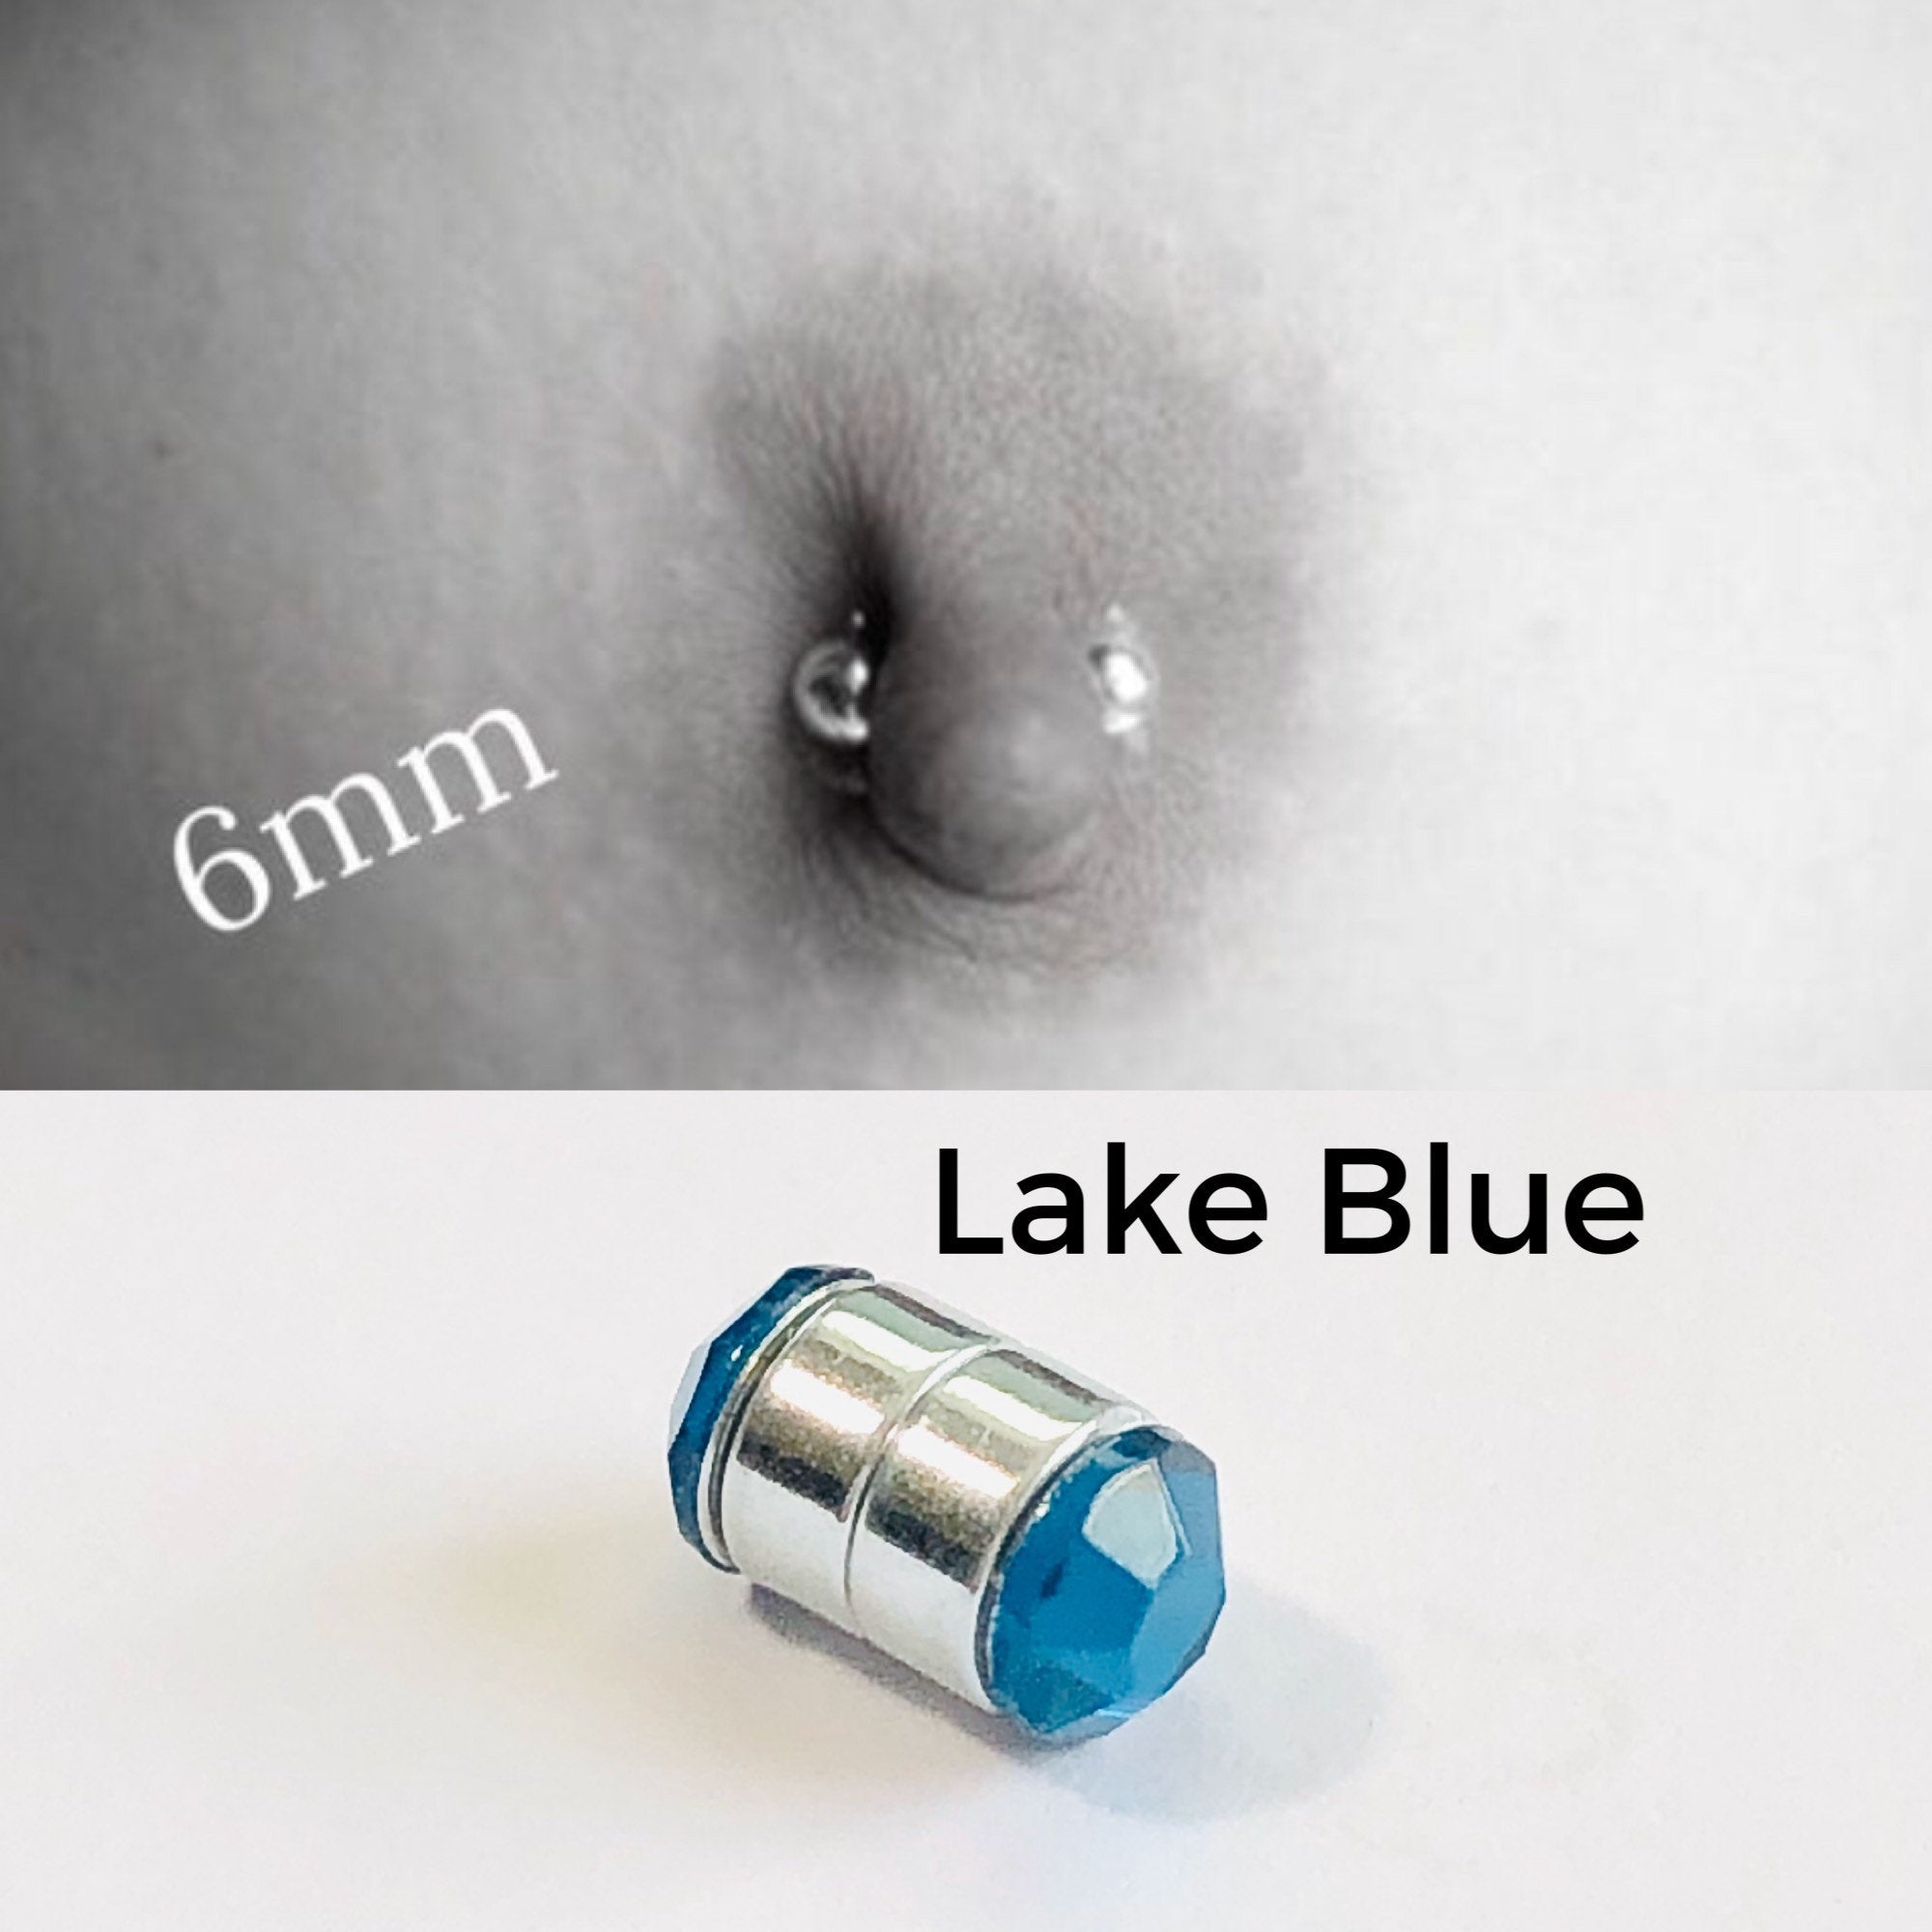 Fake nipple piercing jewelry barbell magnet, CZ diamond, Magnetic